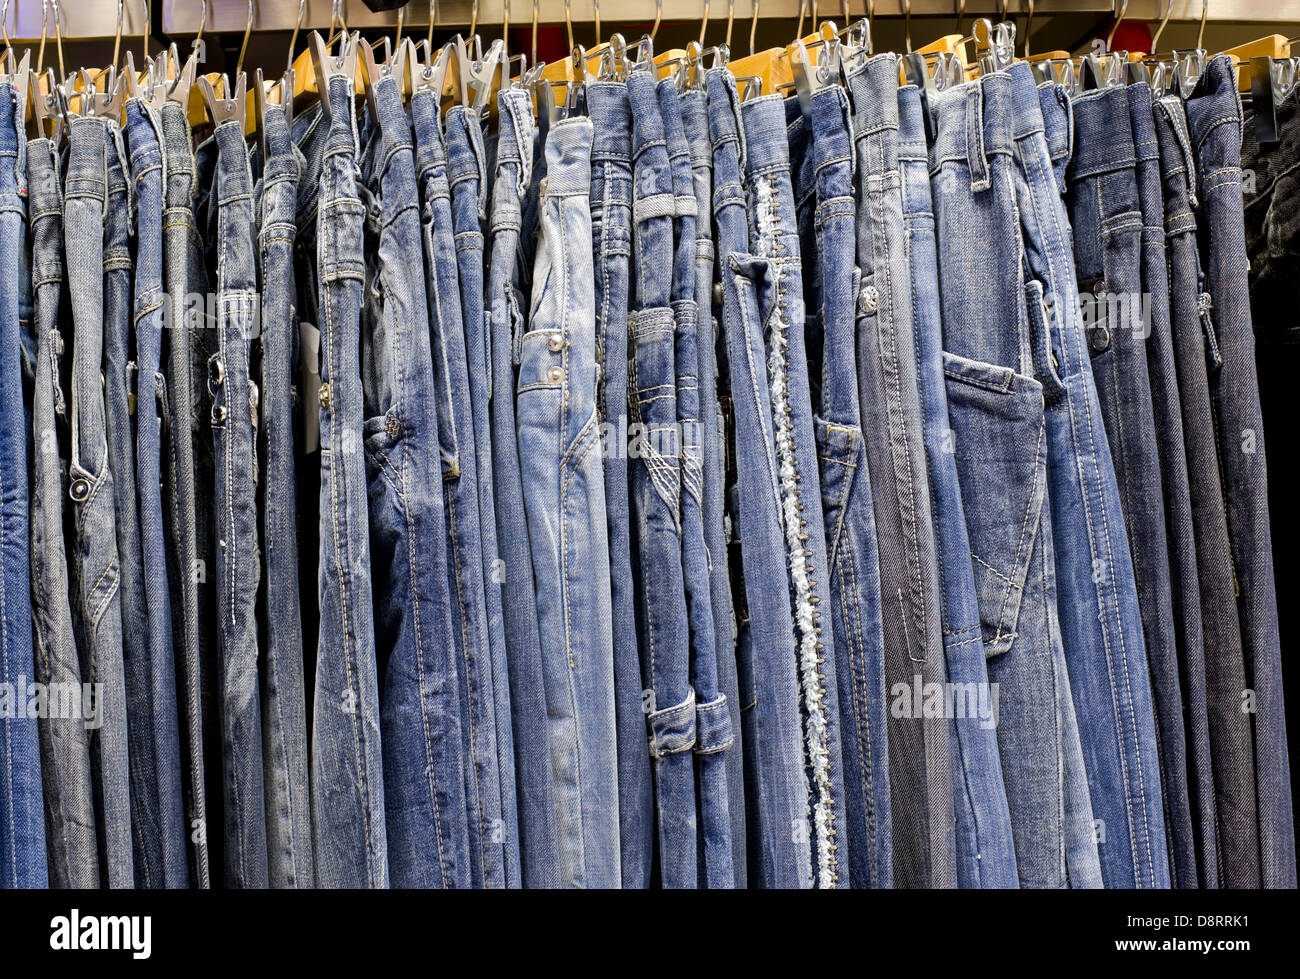 jeans line Stock Photo